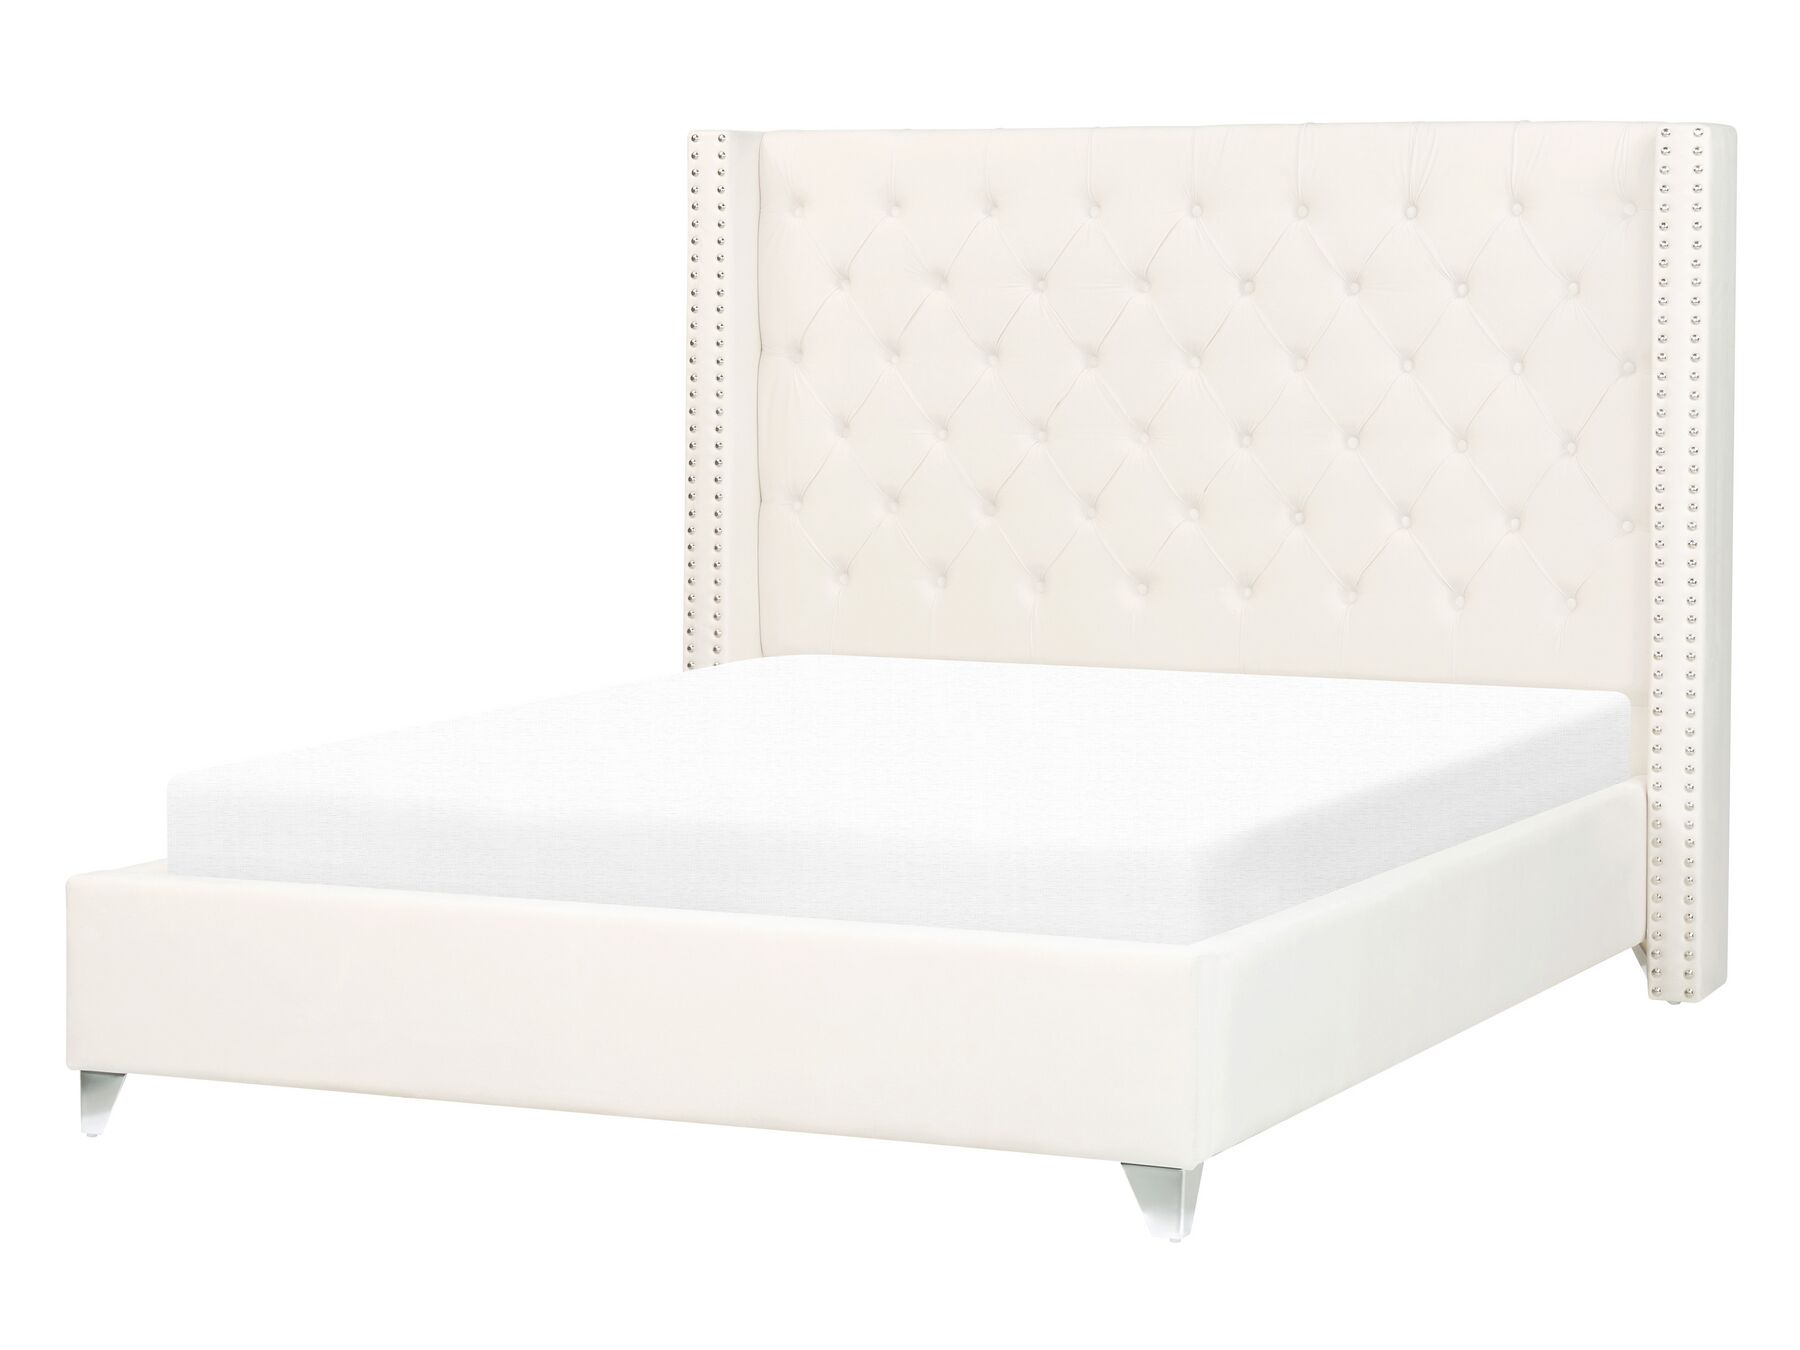 Sametová postel 140 x 200 cm krémově bílá LUBBON_882154